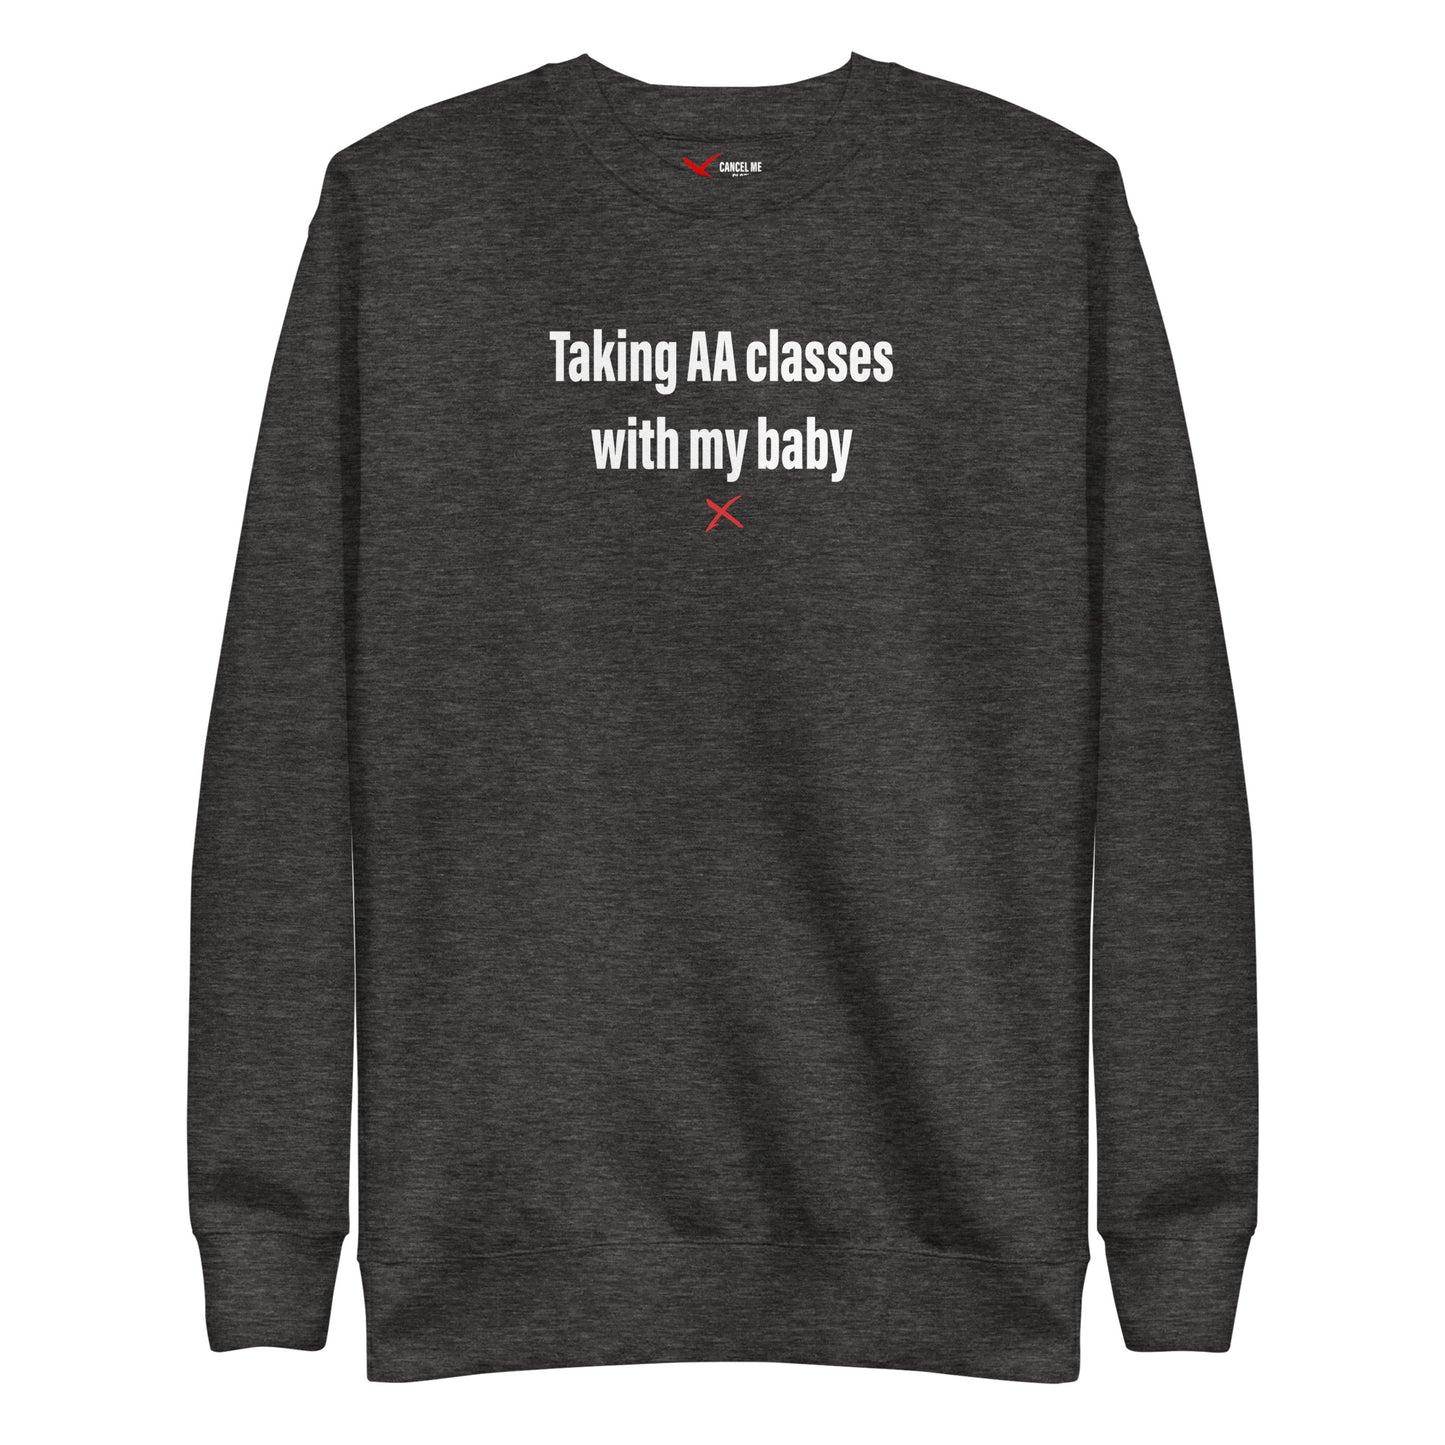 Taking AA classes with my baby - Sweatshirt